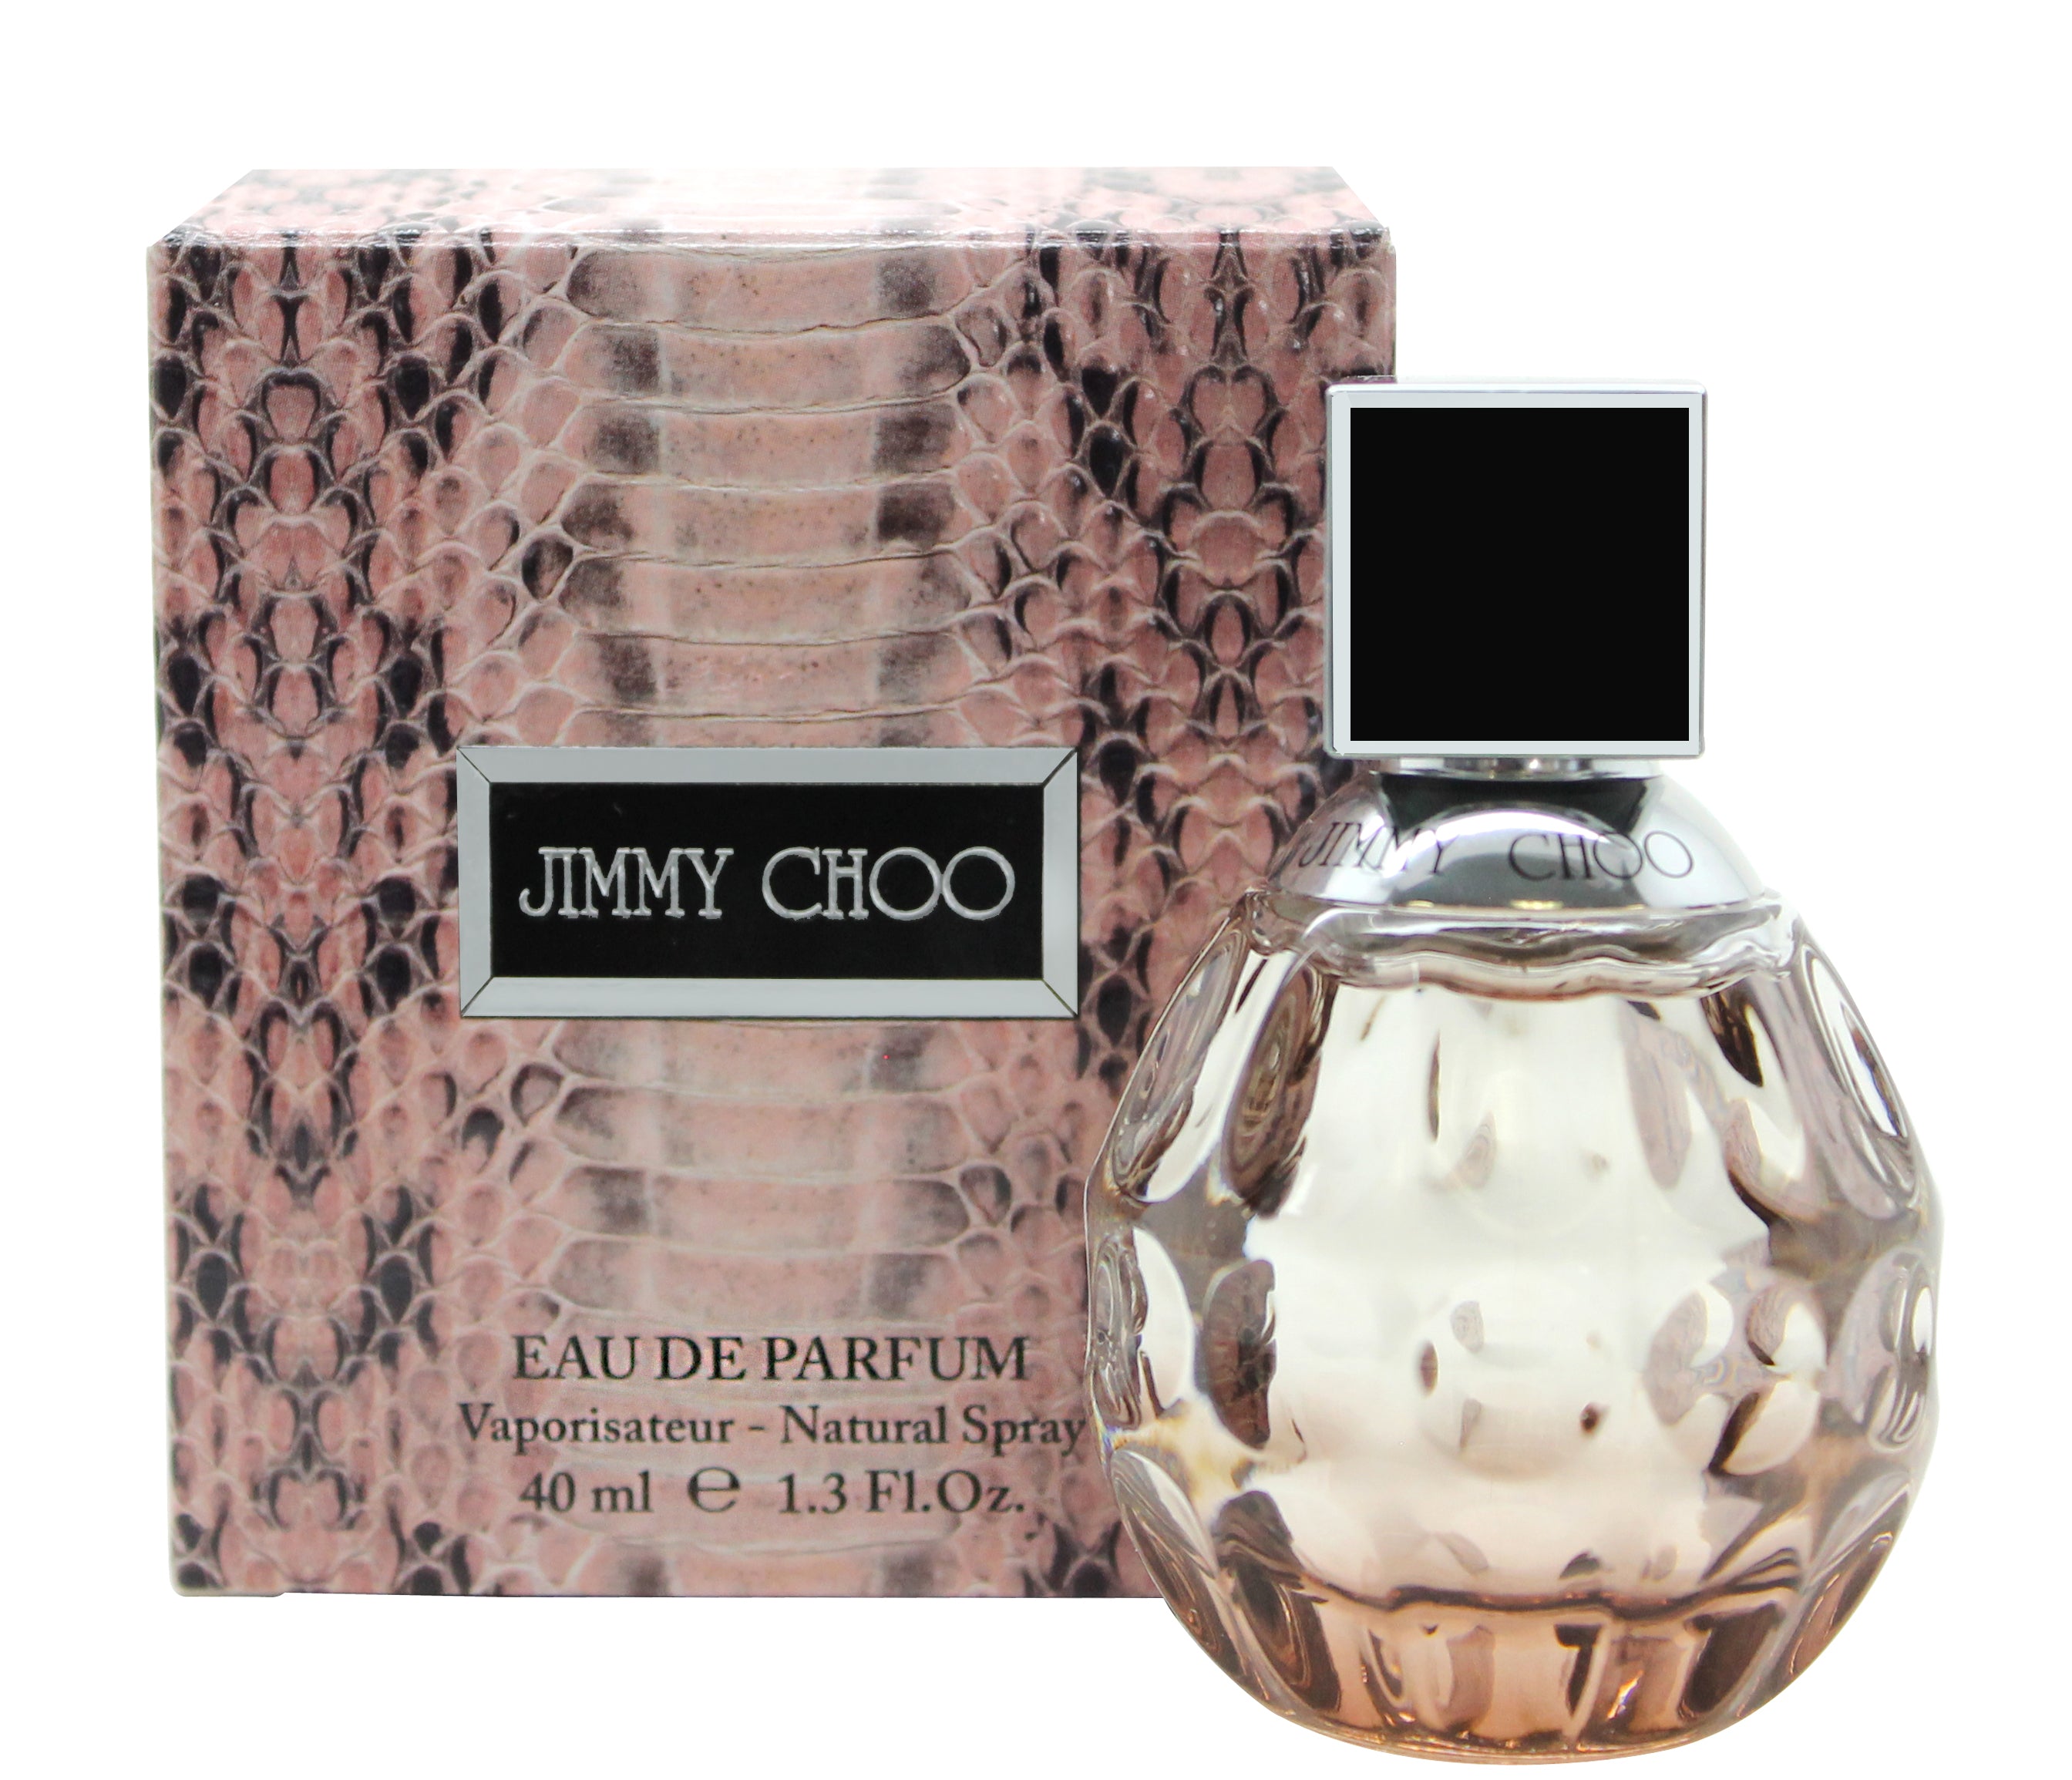 View Jimmy Choo Eau de Parfum 40ml Spray information